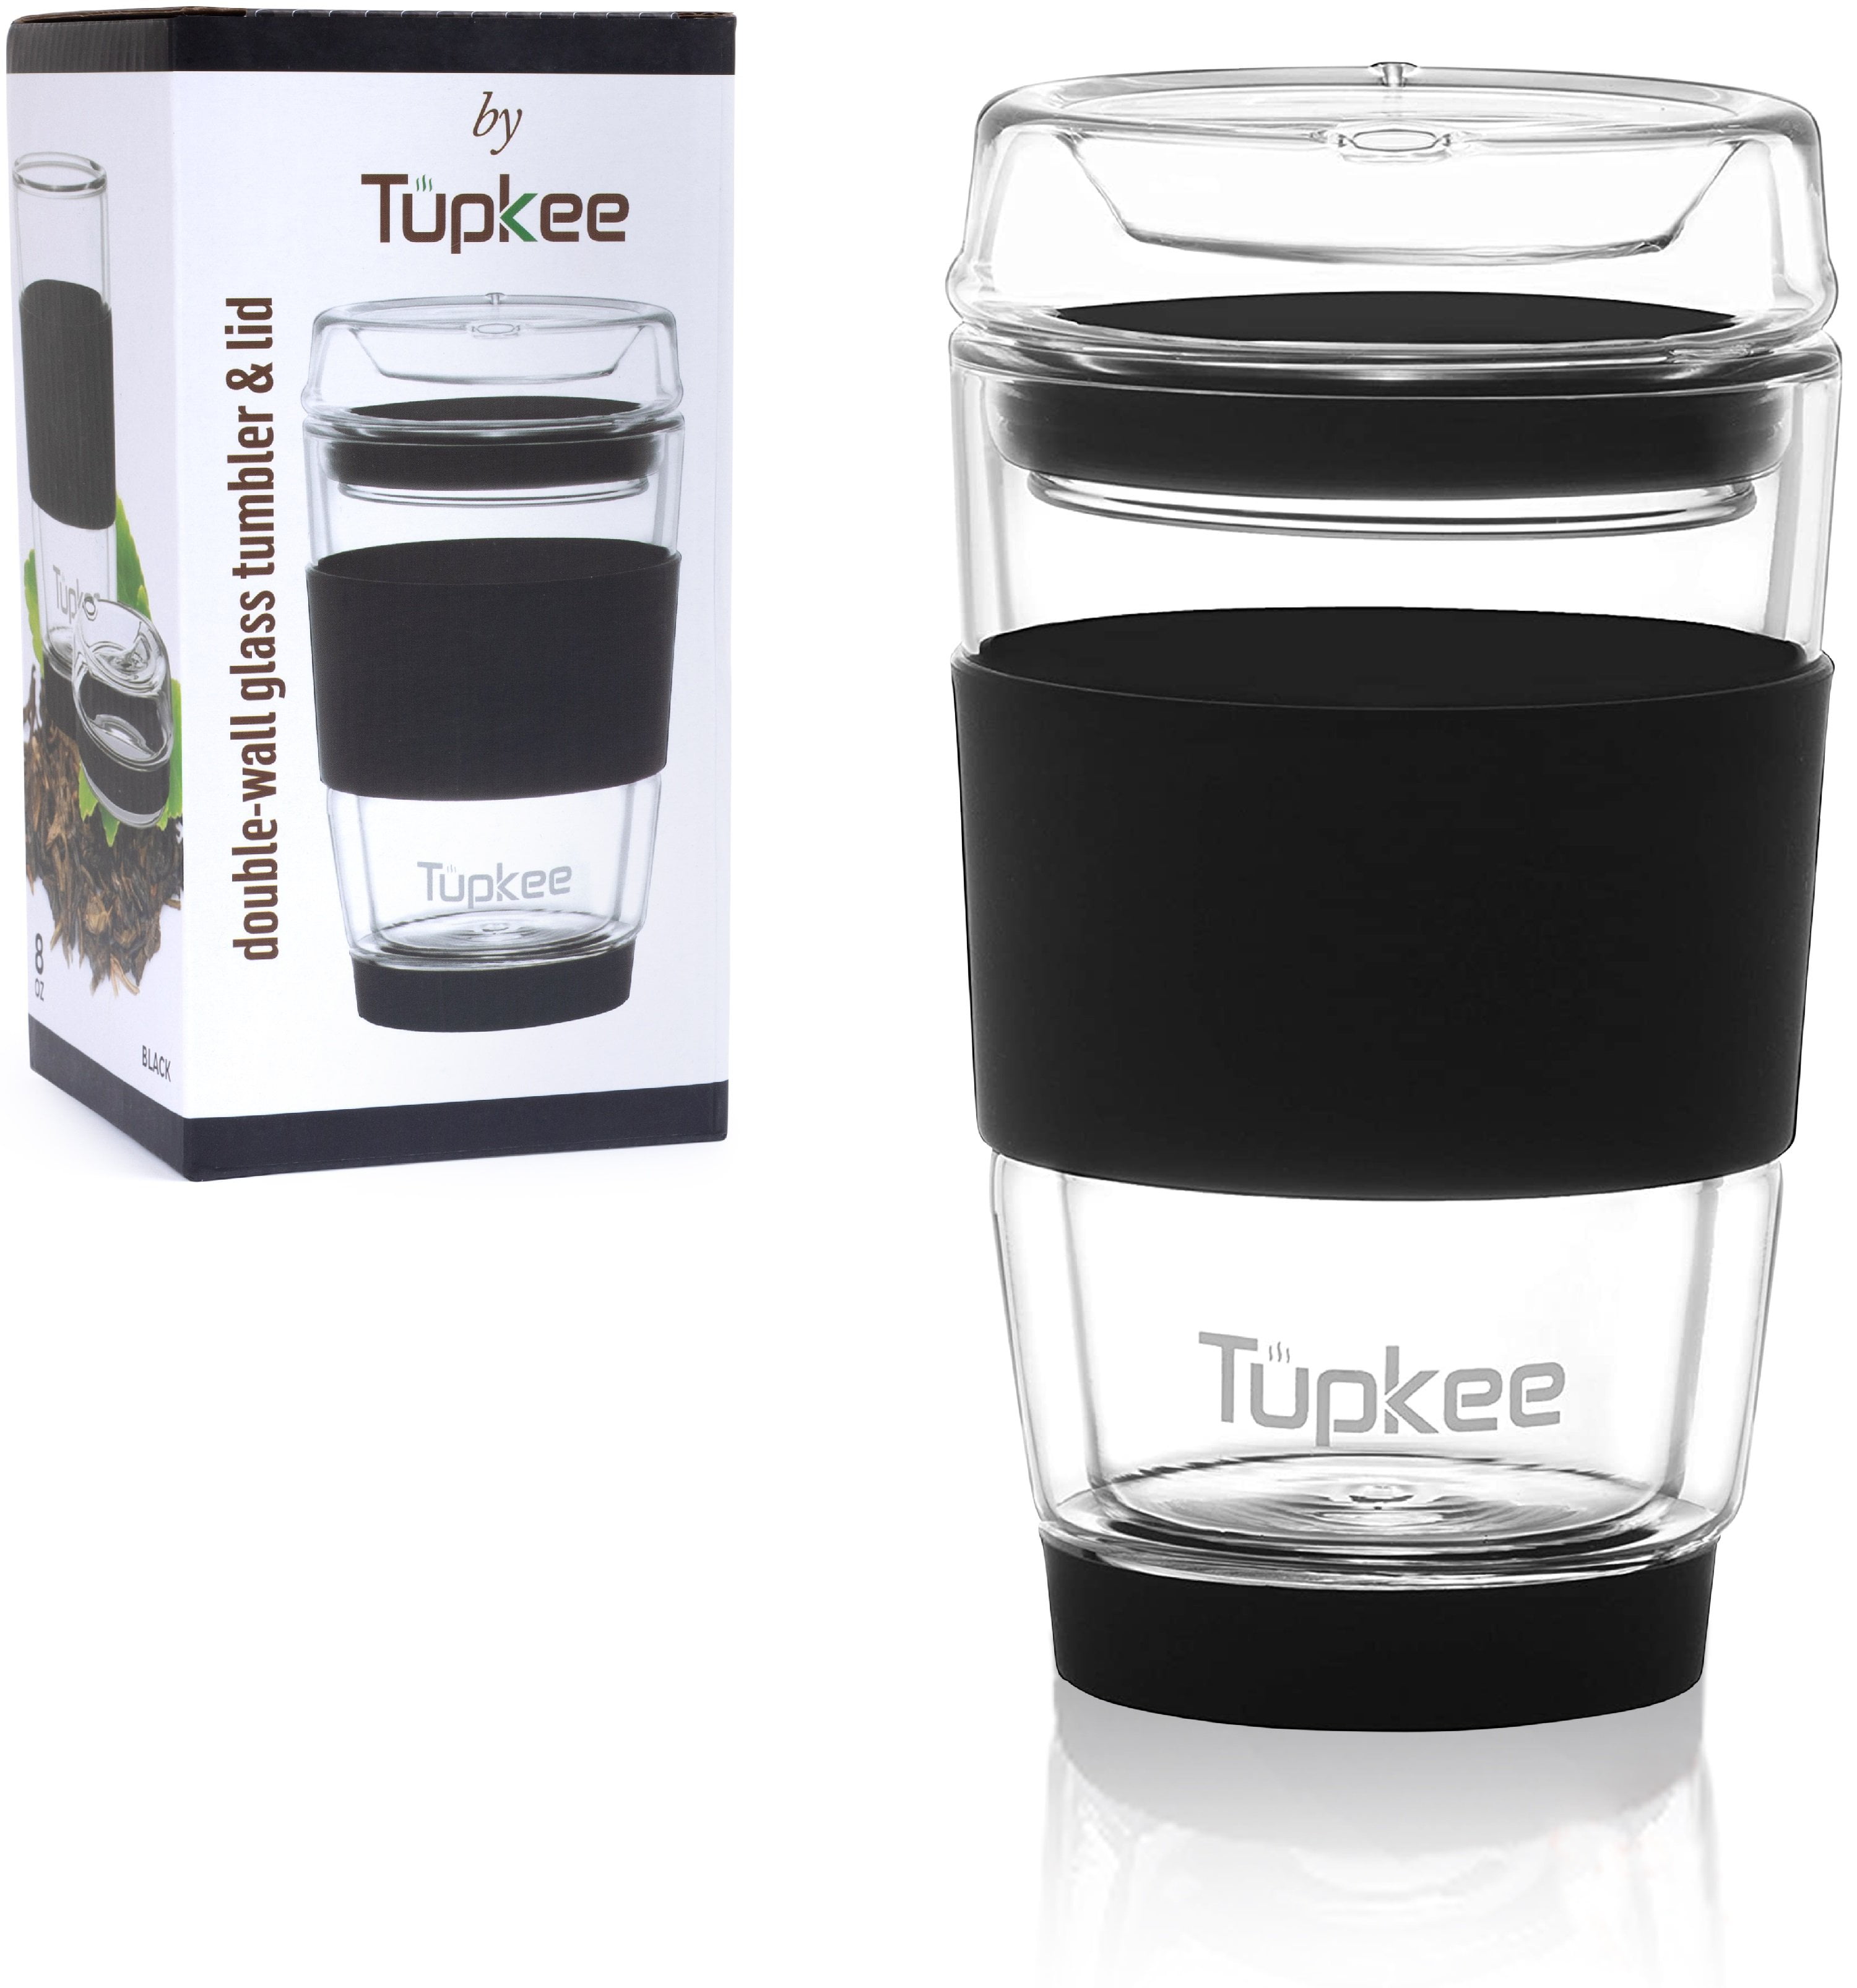 Tupkee Double Wall Glass Tumbler All Glass Reusable Insulated Tea Coffee Mug And Lid Hand Blown